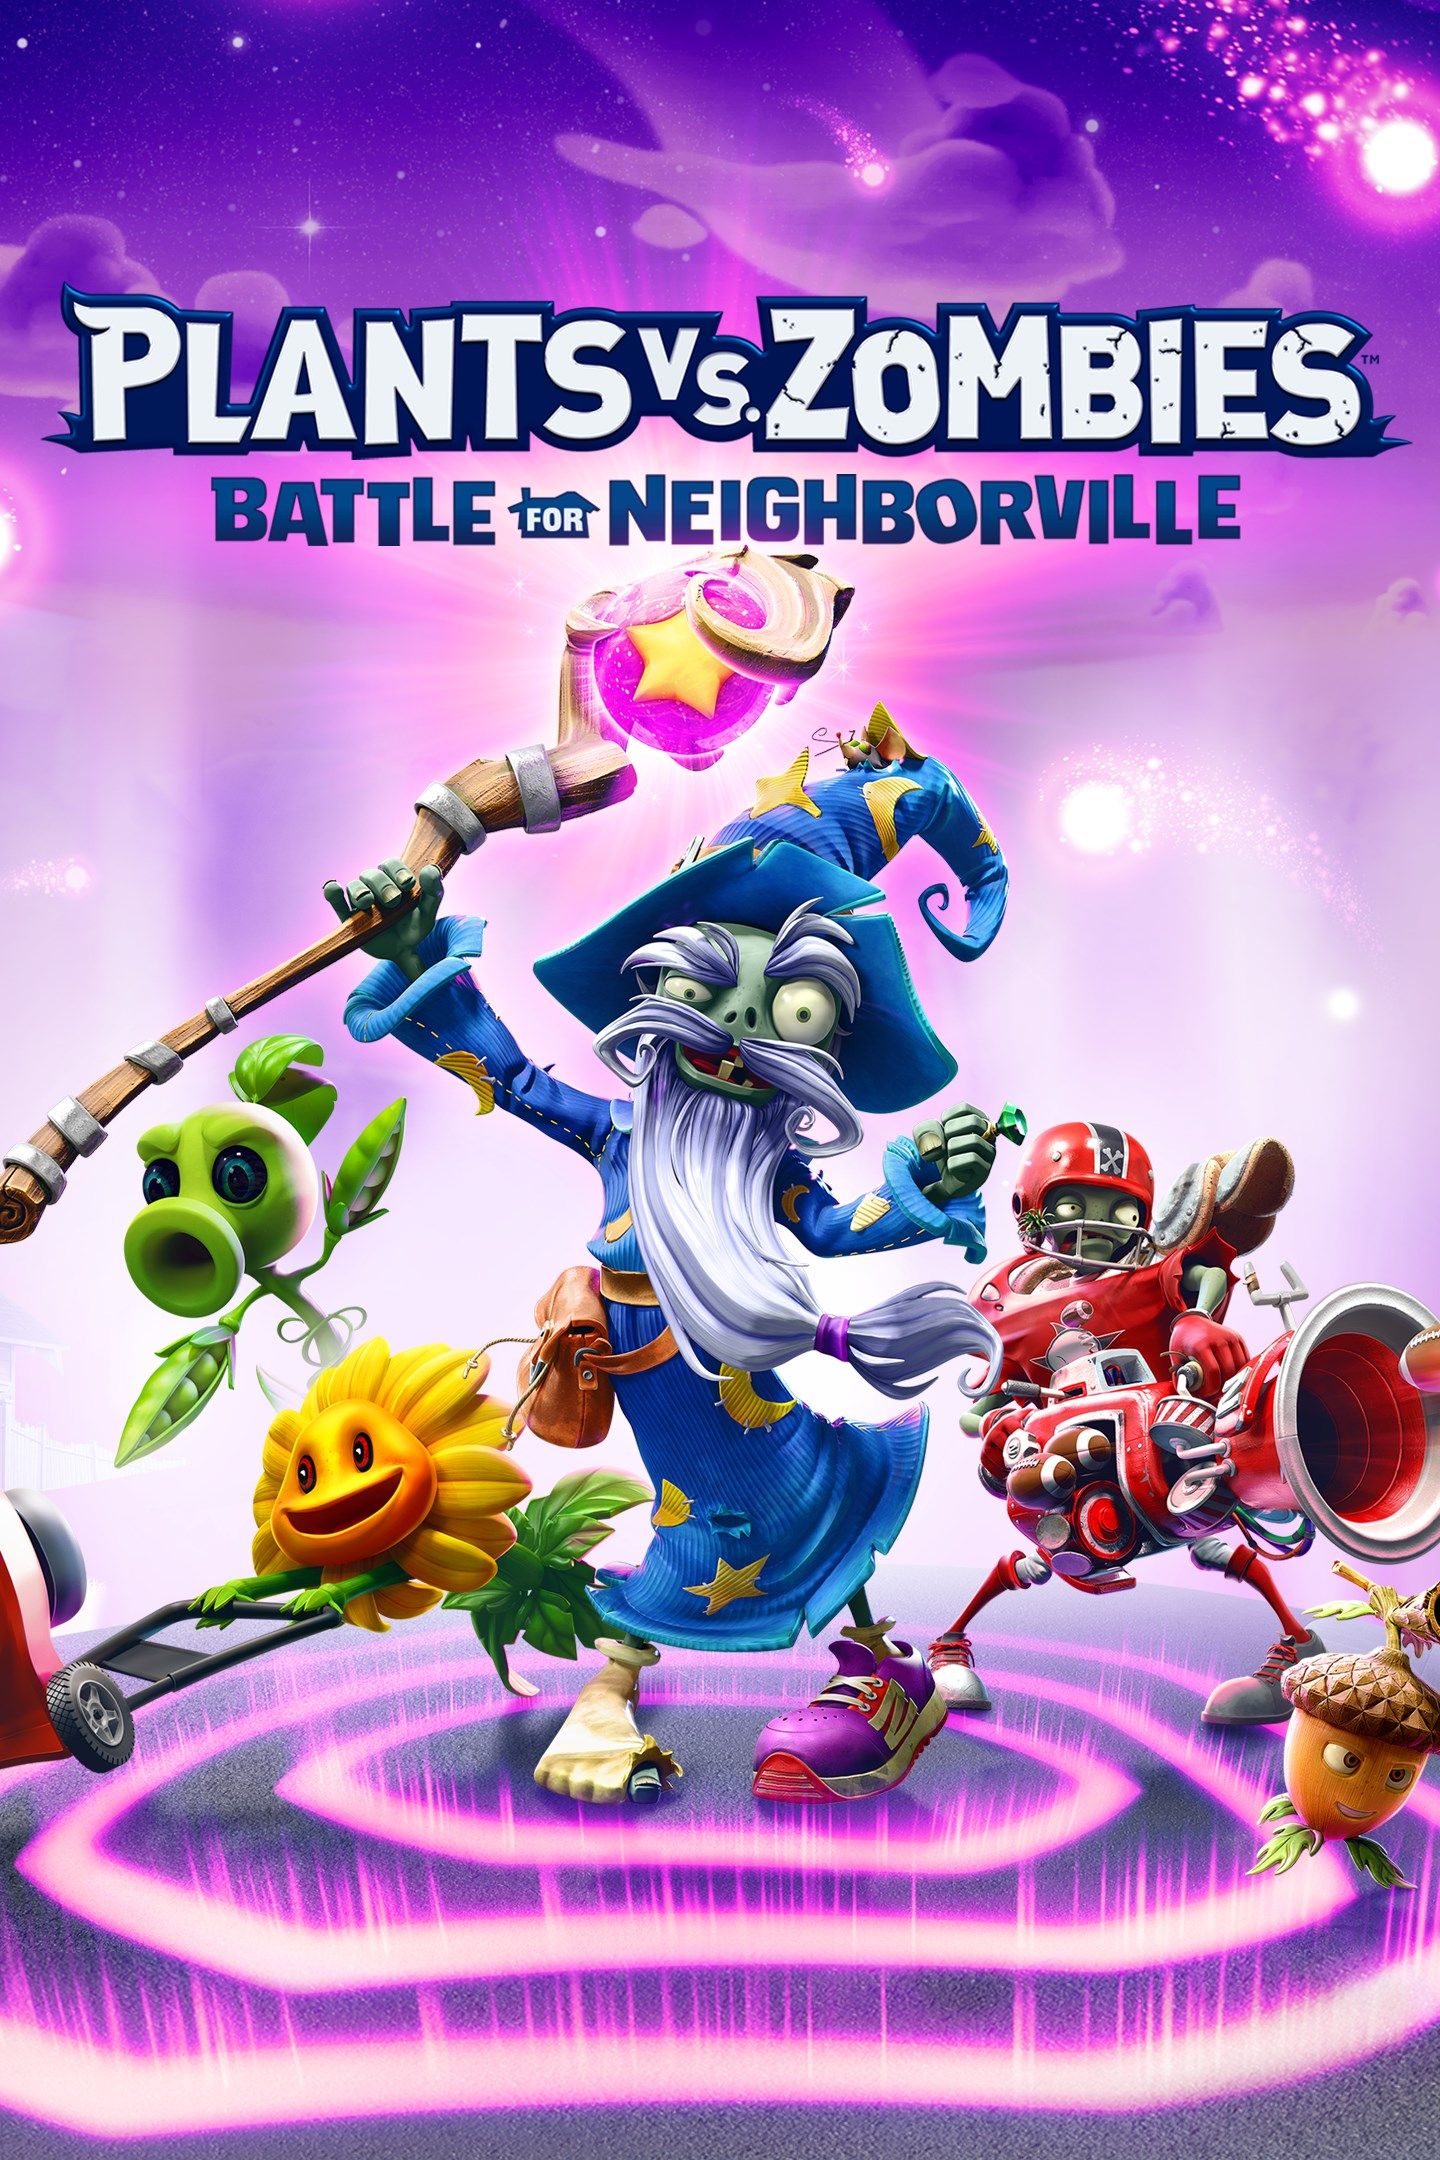 Игры битвы зомби против зомби. Hfcntybz ghjnbd PJV,B ,bndf PF YTQ,thdbkm. Plants vs. Zombies™: битва за нейборвиль. Растения против зомби битва за нейборвиль. Plants vs. Zombies™: битва за нейборвиль издание Deluxe.